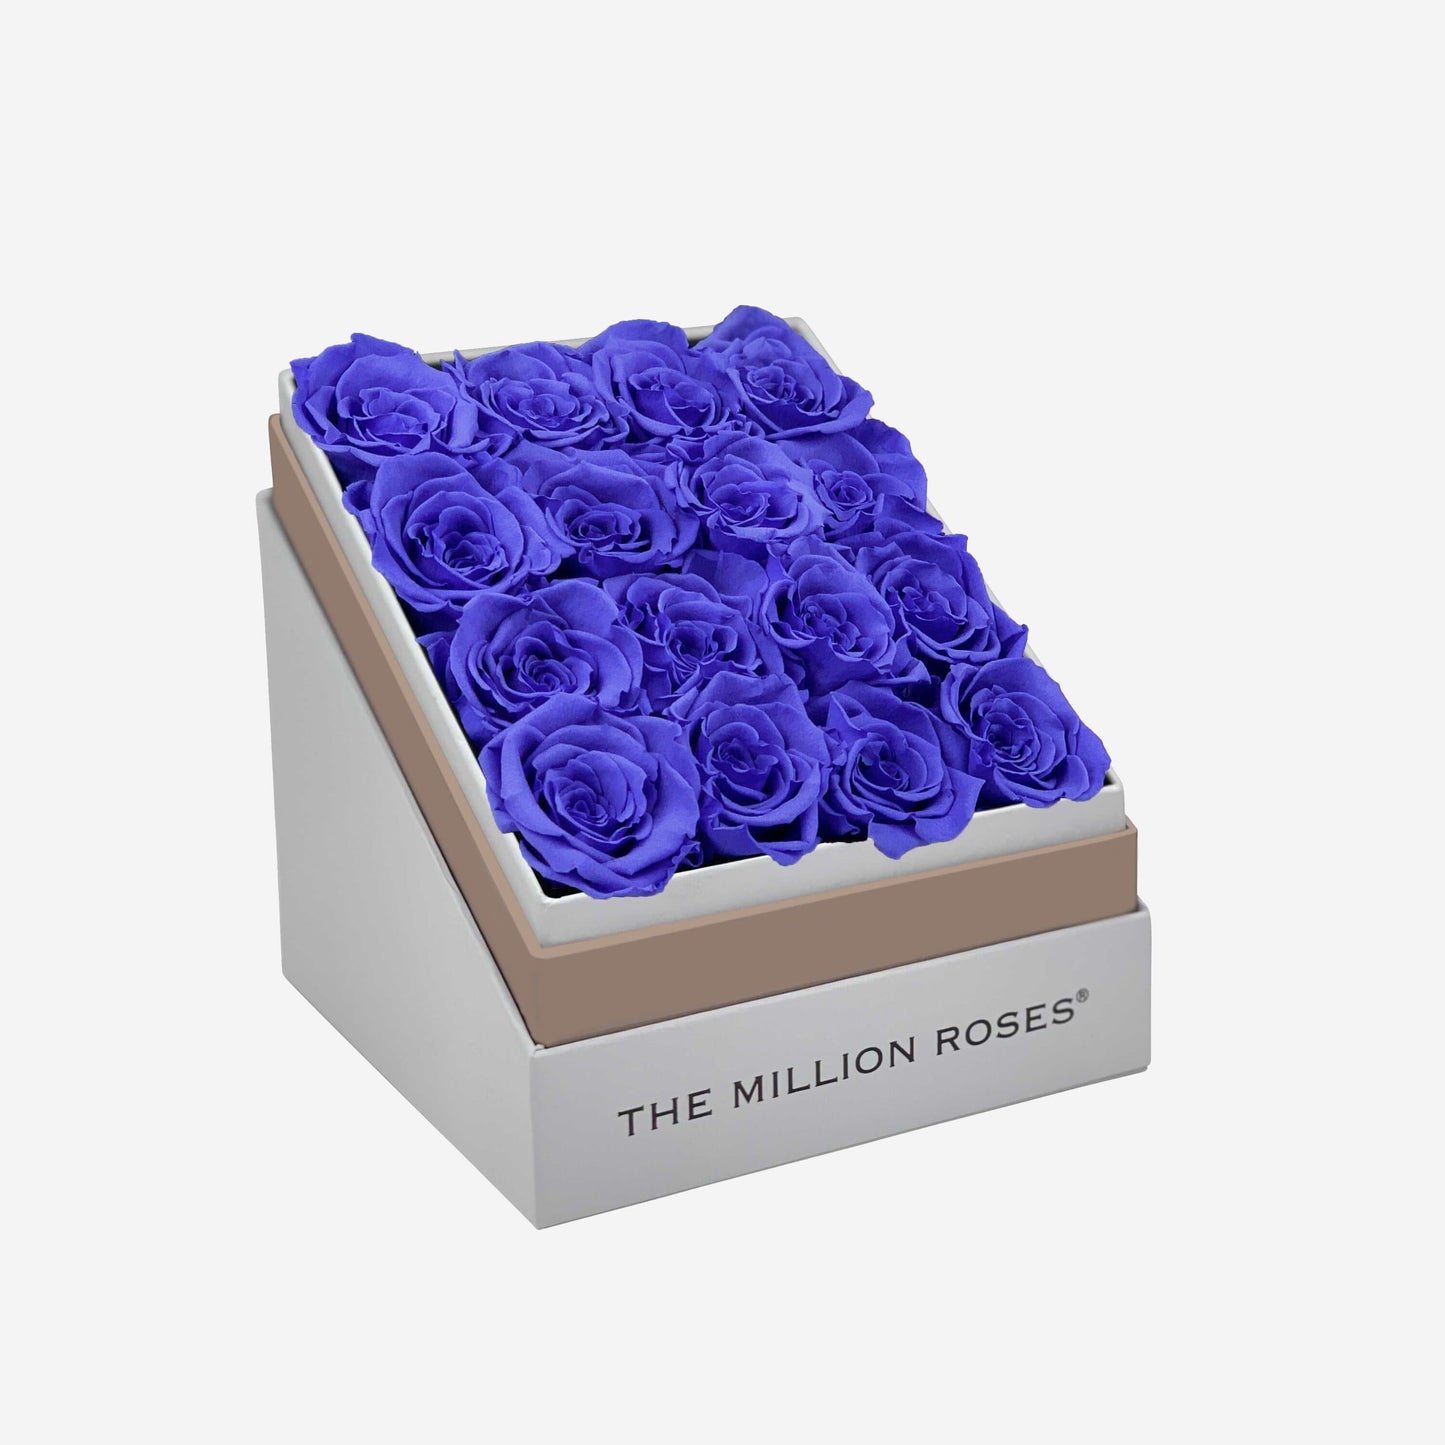 Square White Box | Violet Roses - The Million Roses